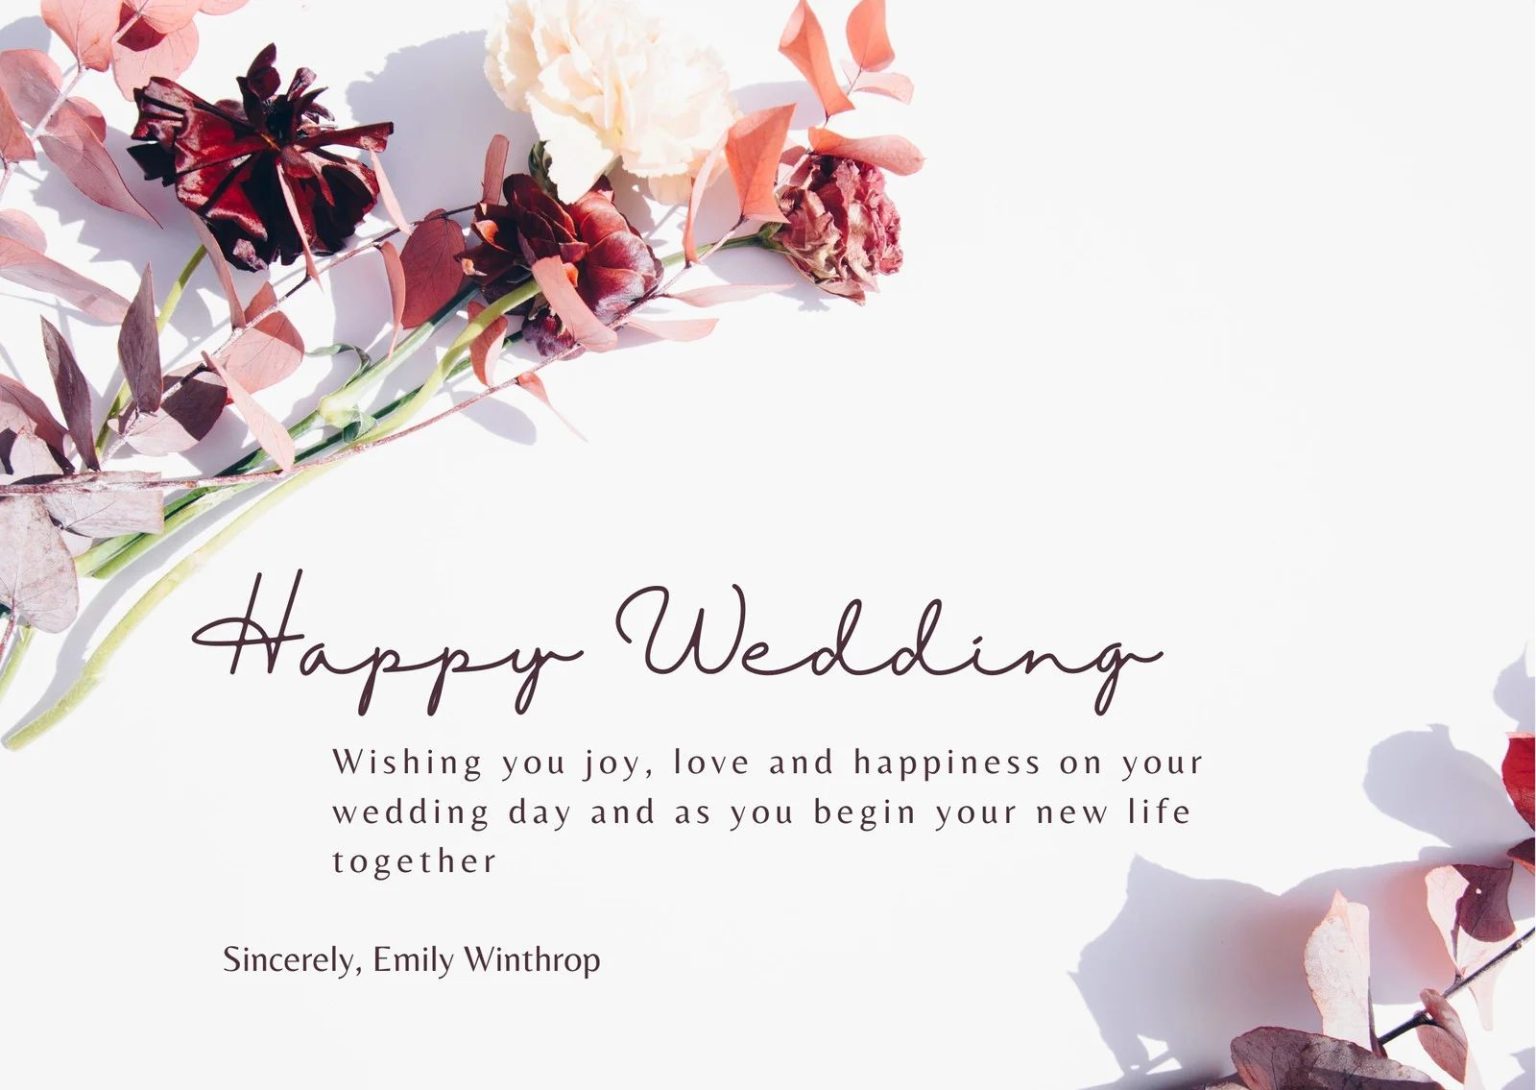 Free Printable Wedding Wishes - Image to u